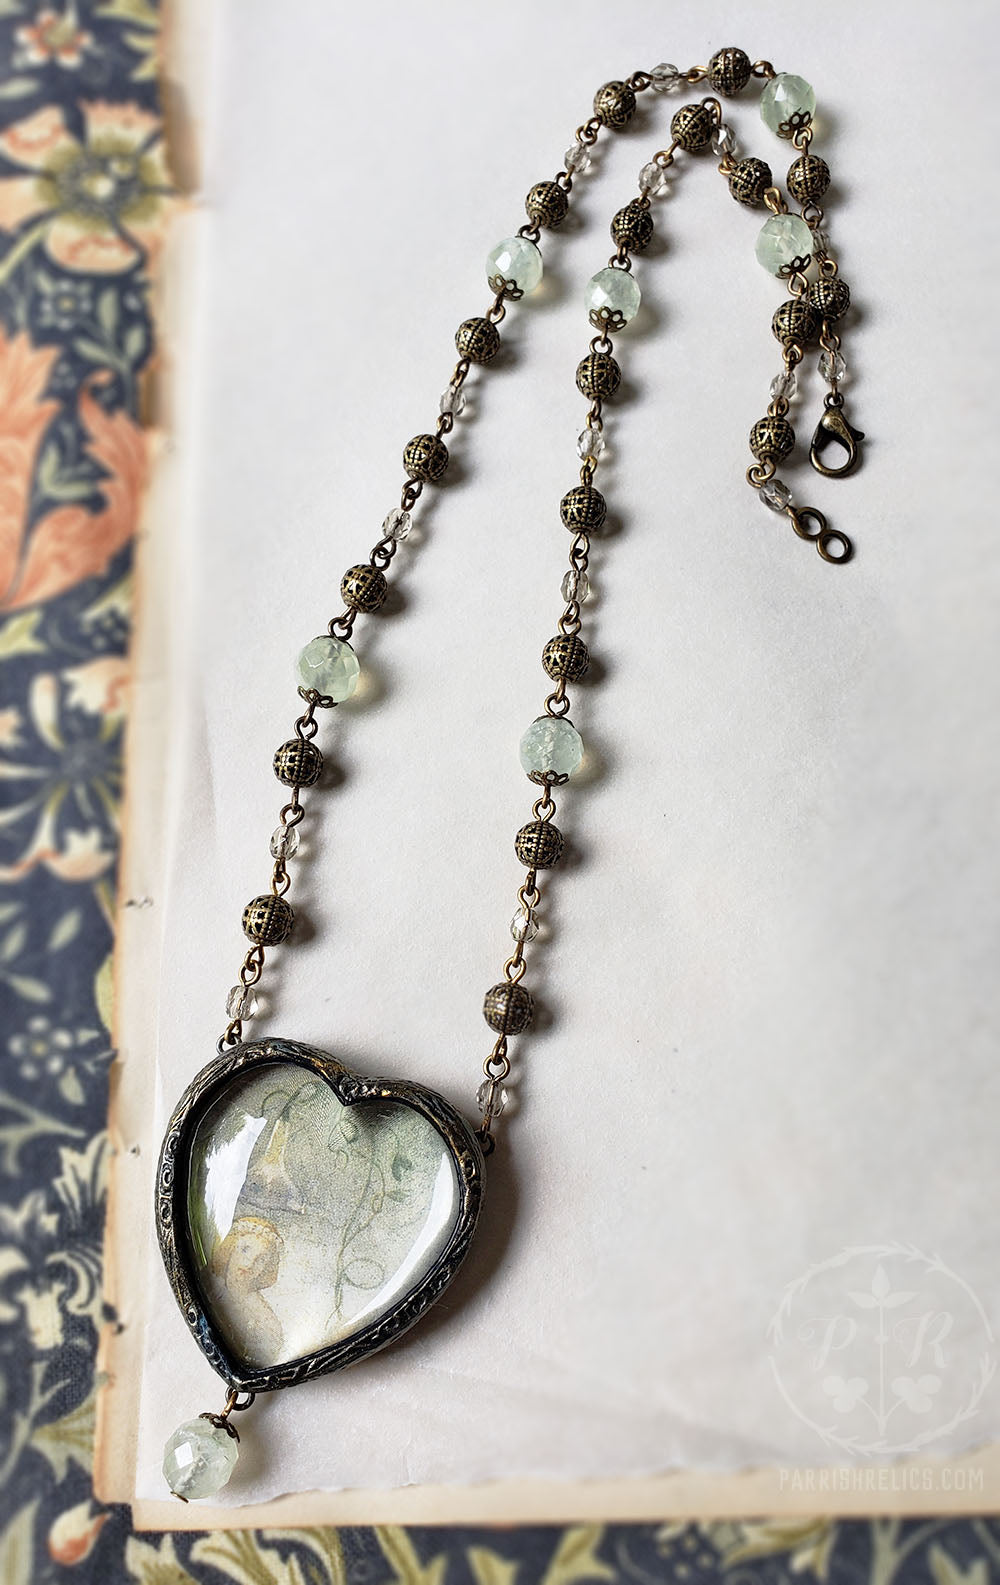 Fairy Queen ~ John Anster Fitzgerald Pictorial Shrine Heart Amulet